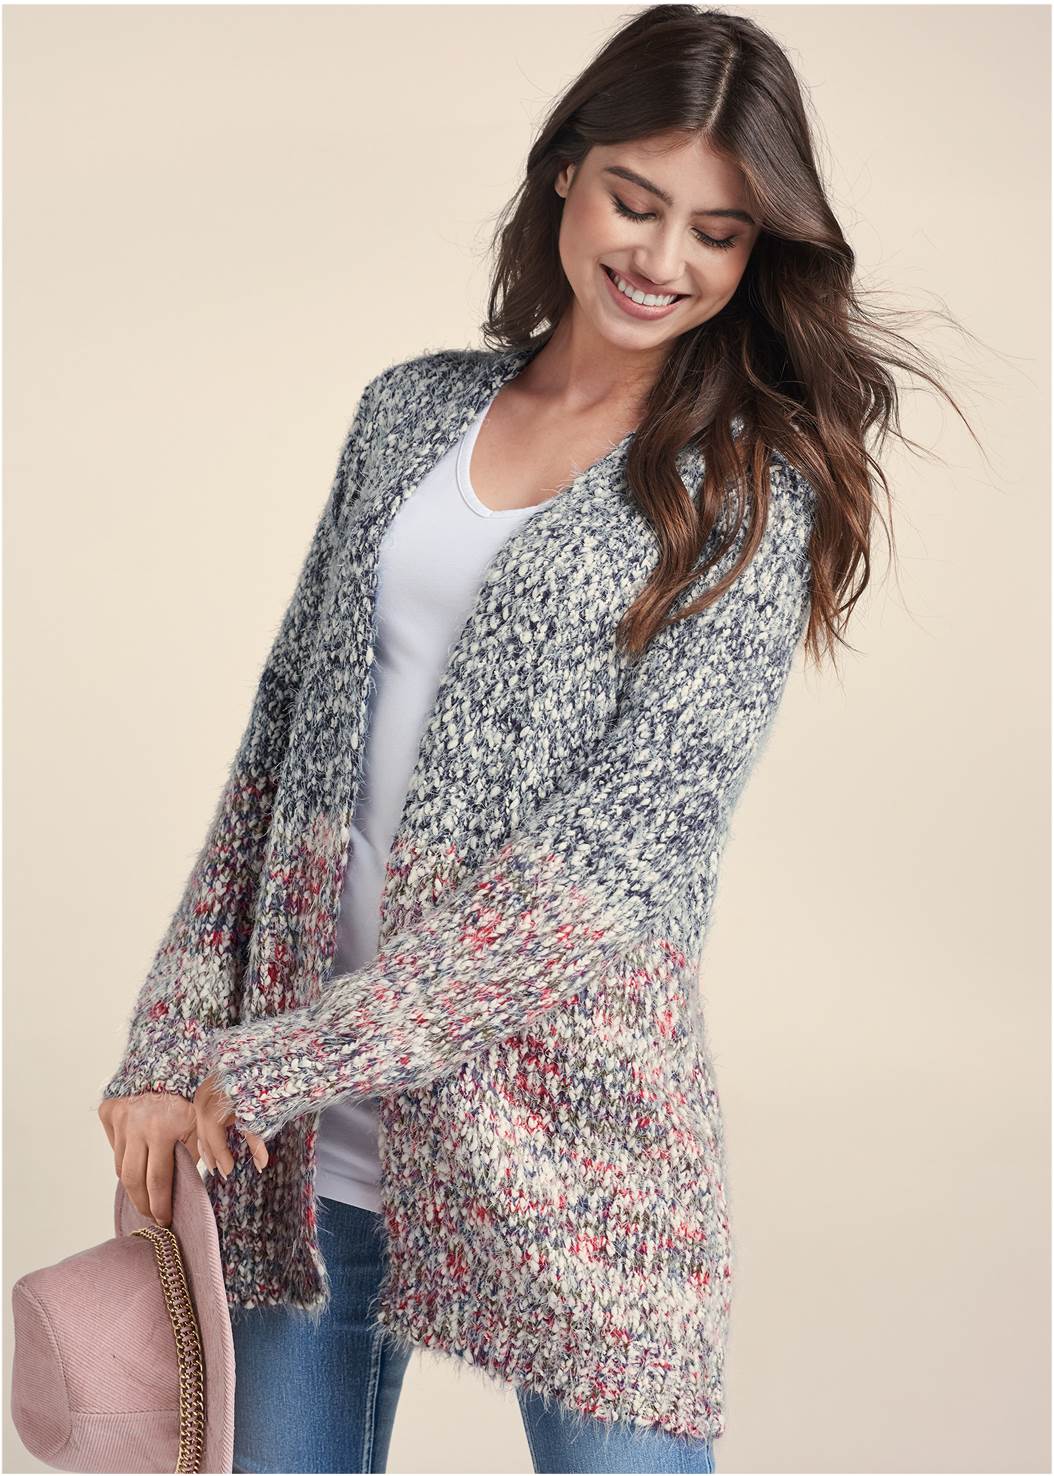 Get the look: tweed jacket and skinny jeans - Cheryl Shops